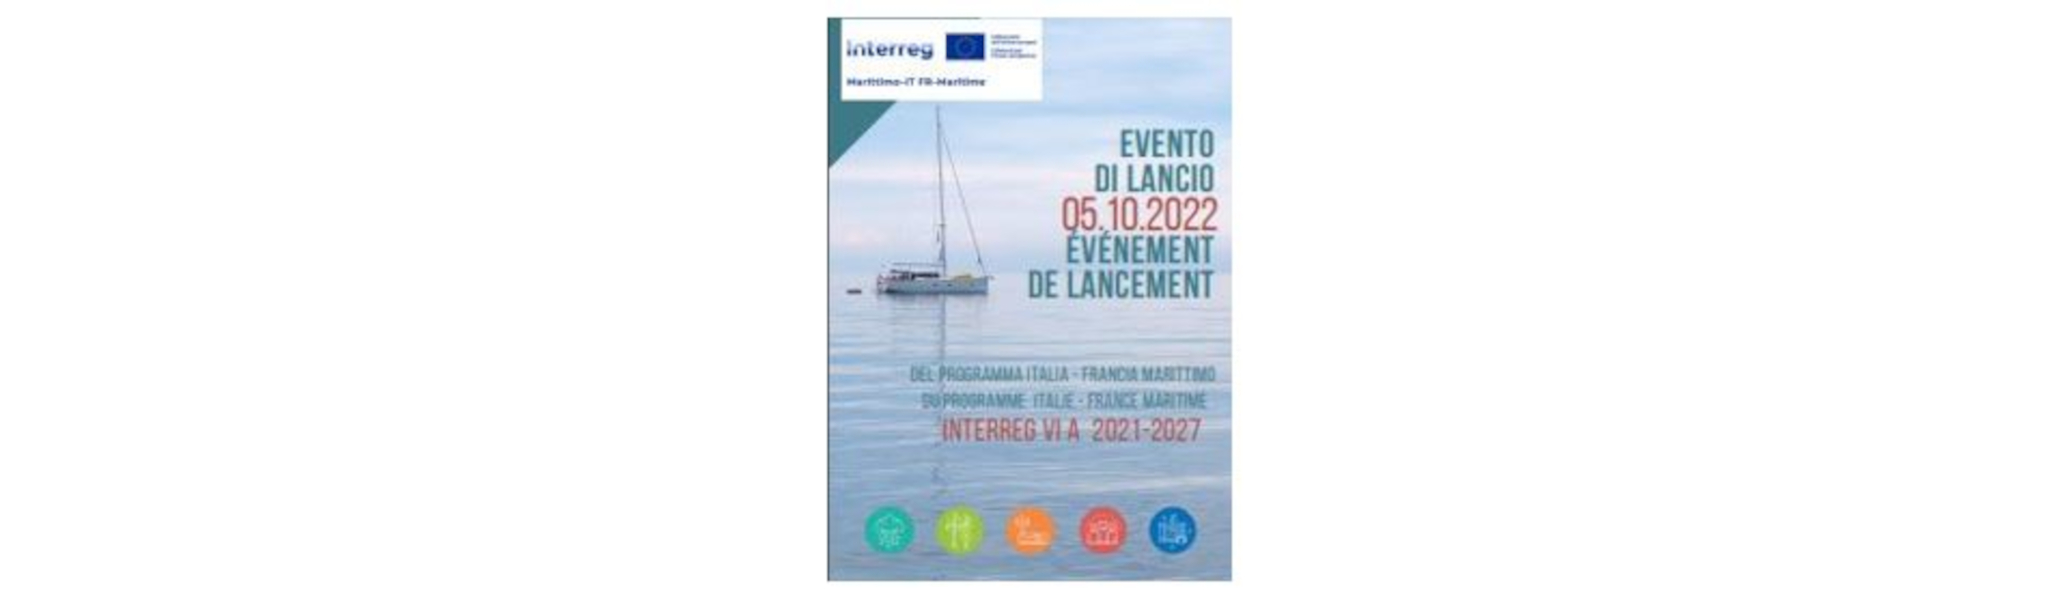 Firenze 5 ottobre evento lancio Programma INTERREG VI A 2021 - 2027